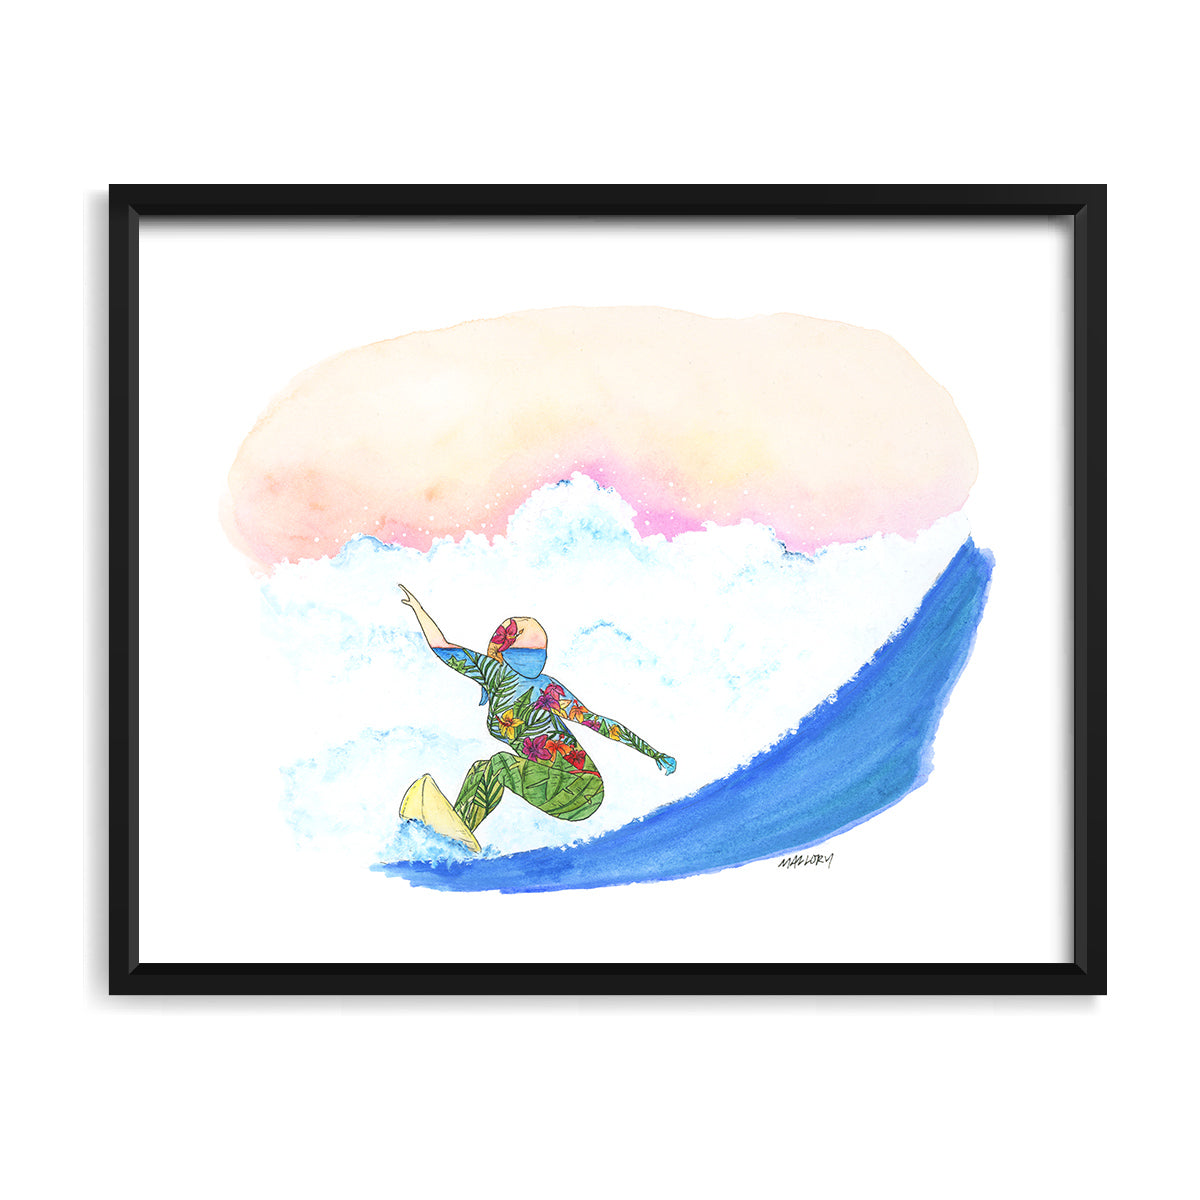 Surf Girl 8x10" Art Print